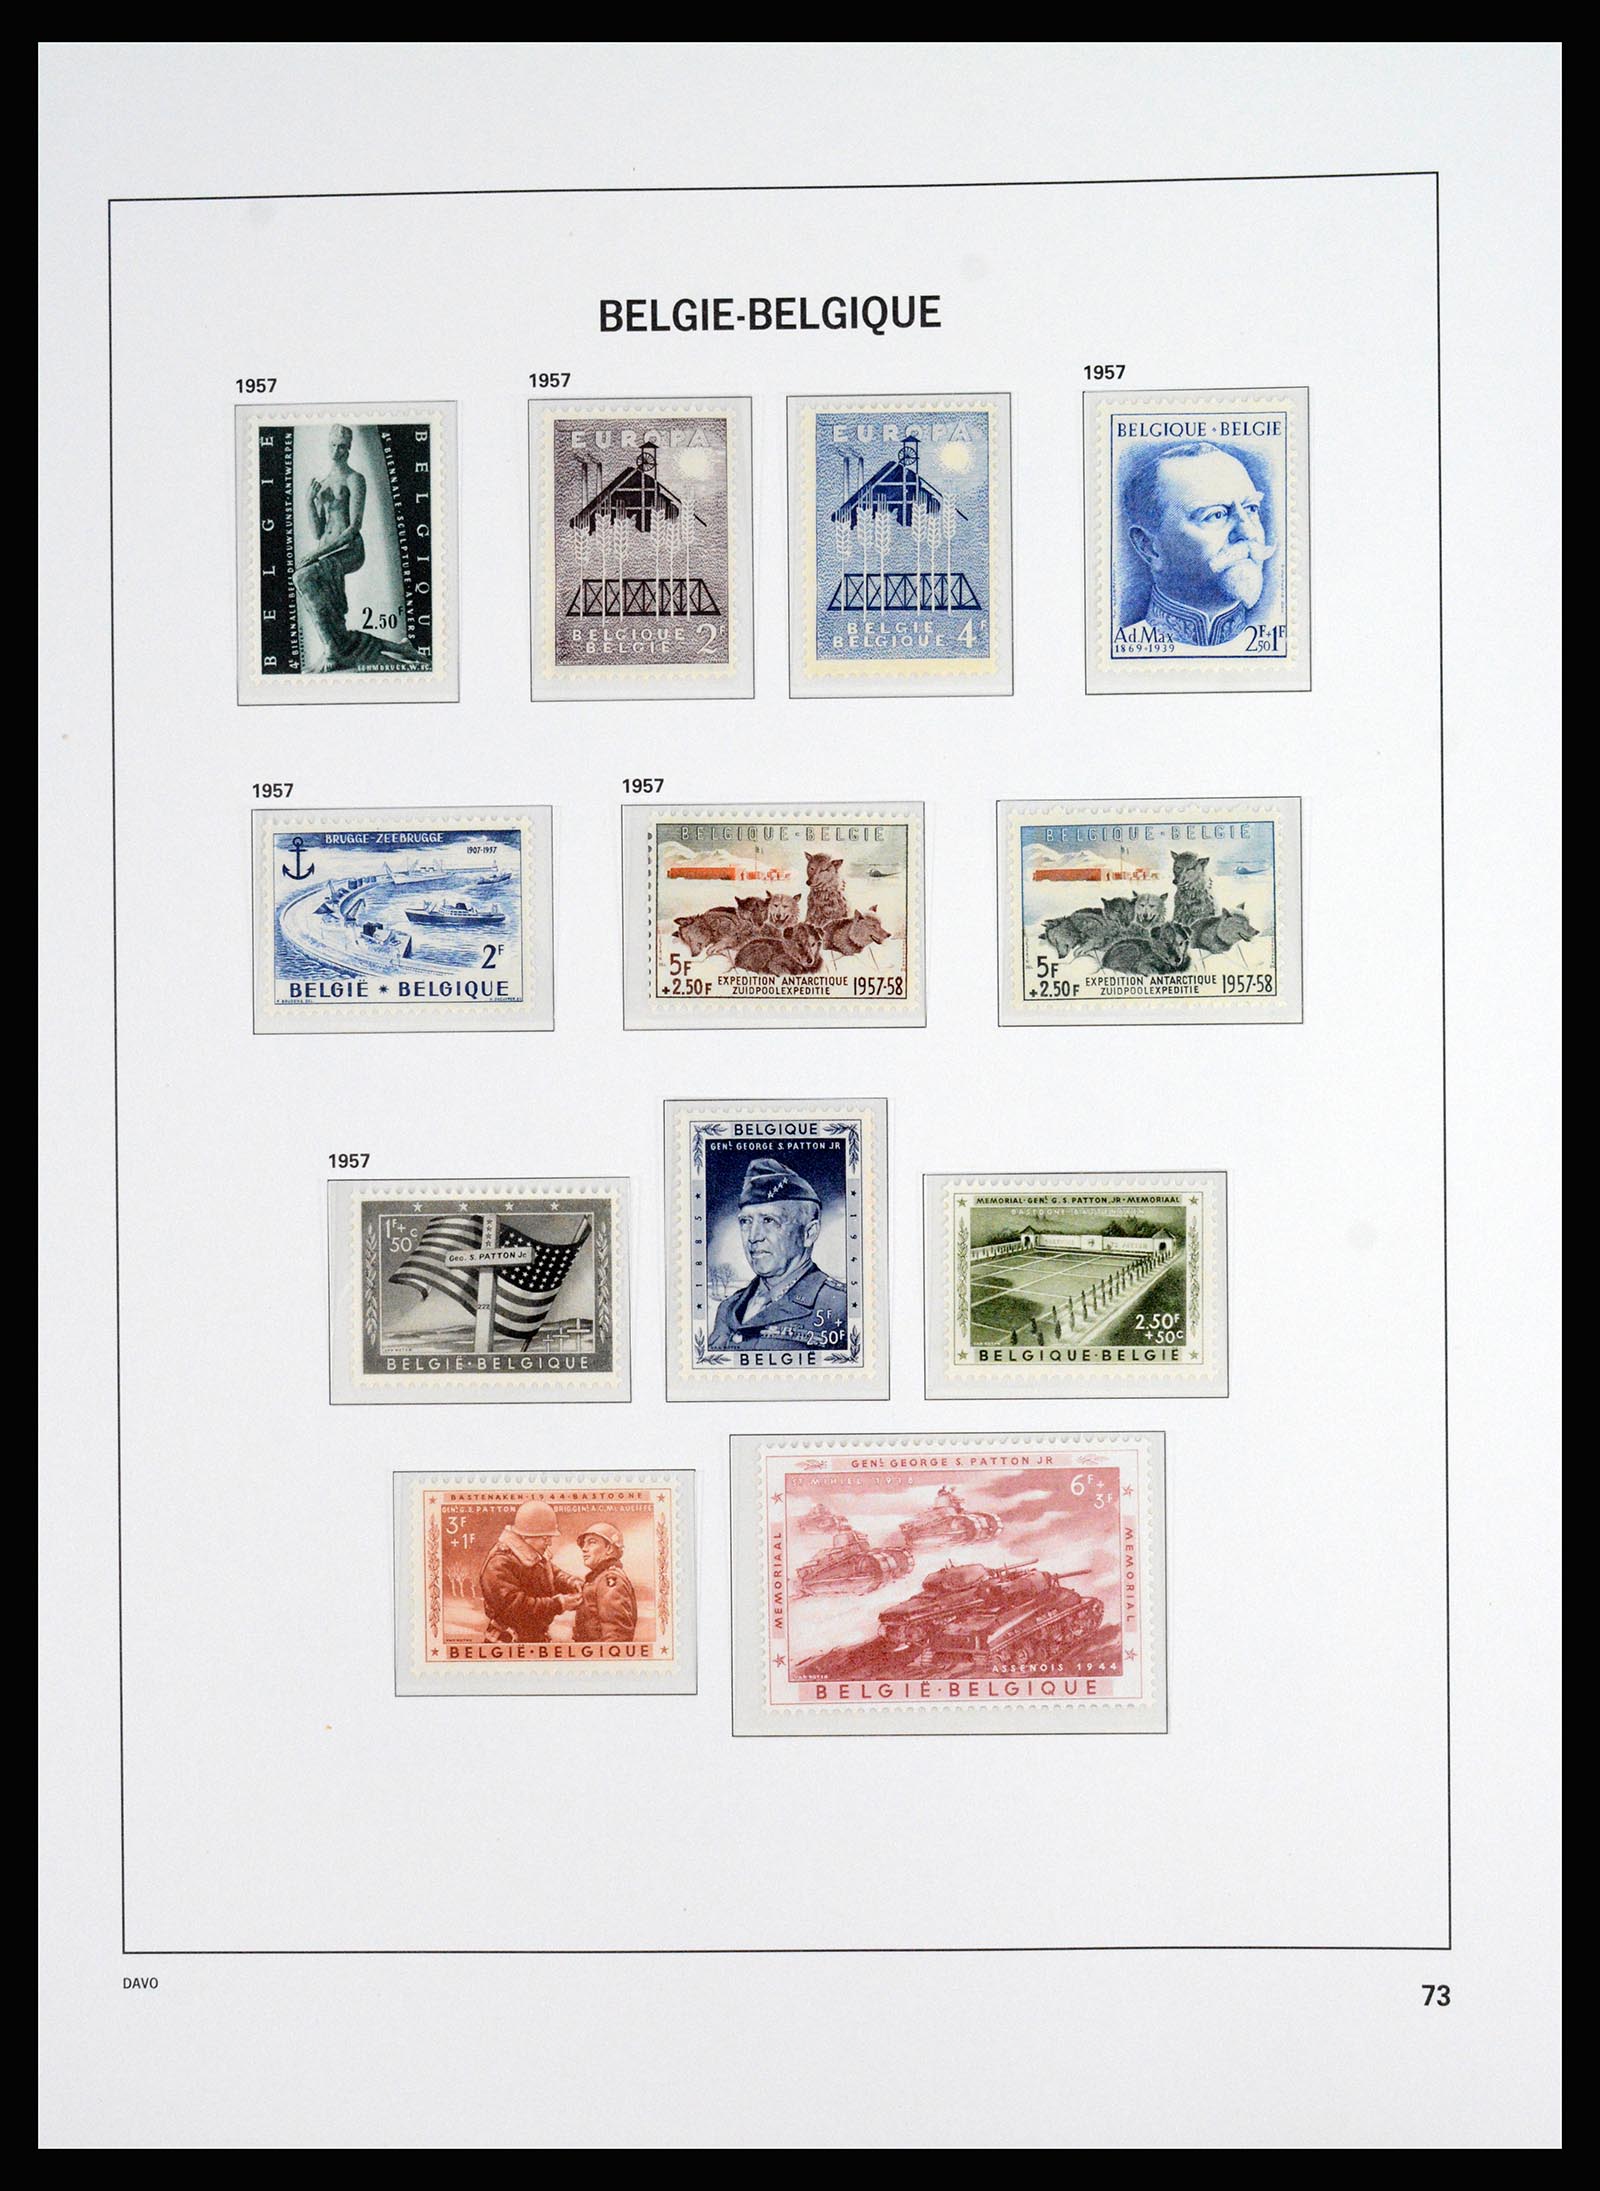 37179 020 - Stamp collection 37179 Belgium 1949-2000.